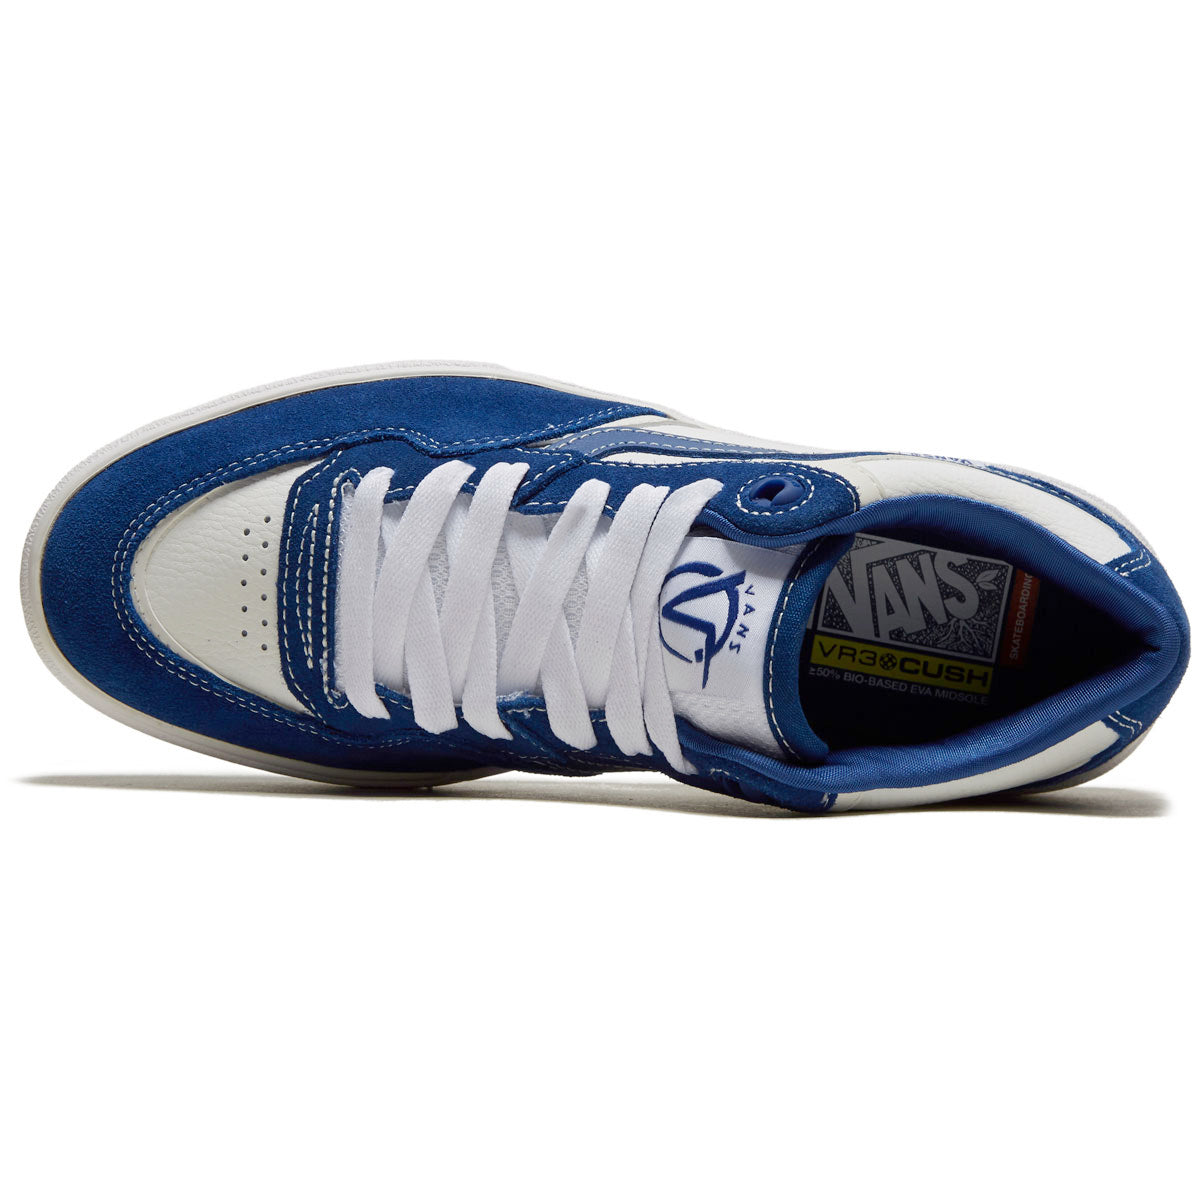 Vans Rowan 2 Shoes - True Blue/White image 3